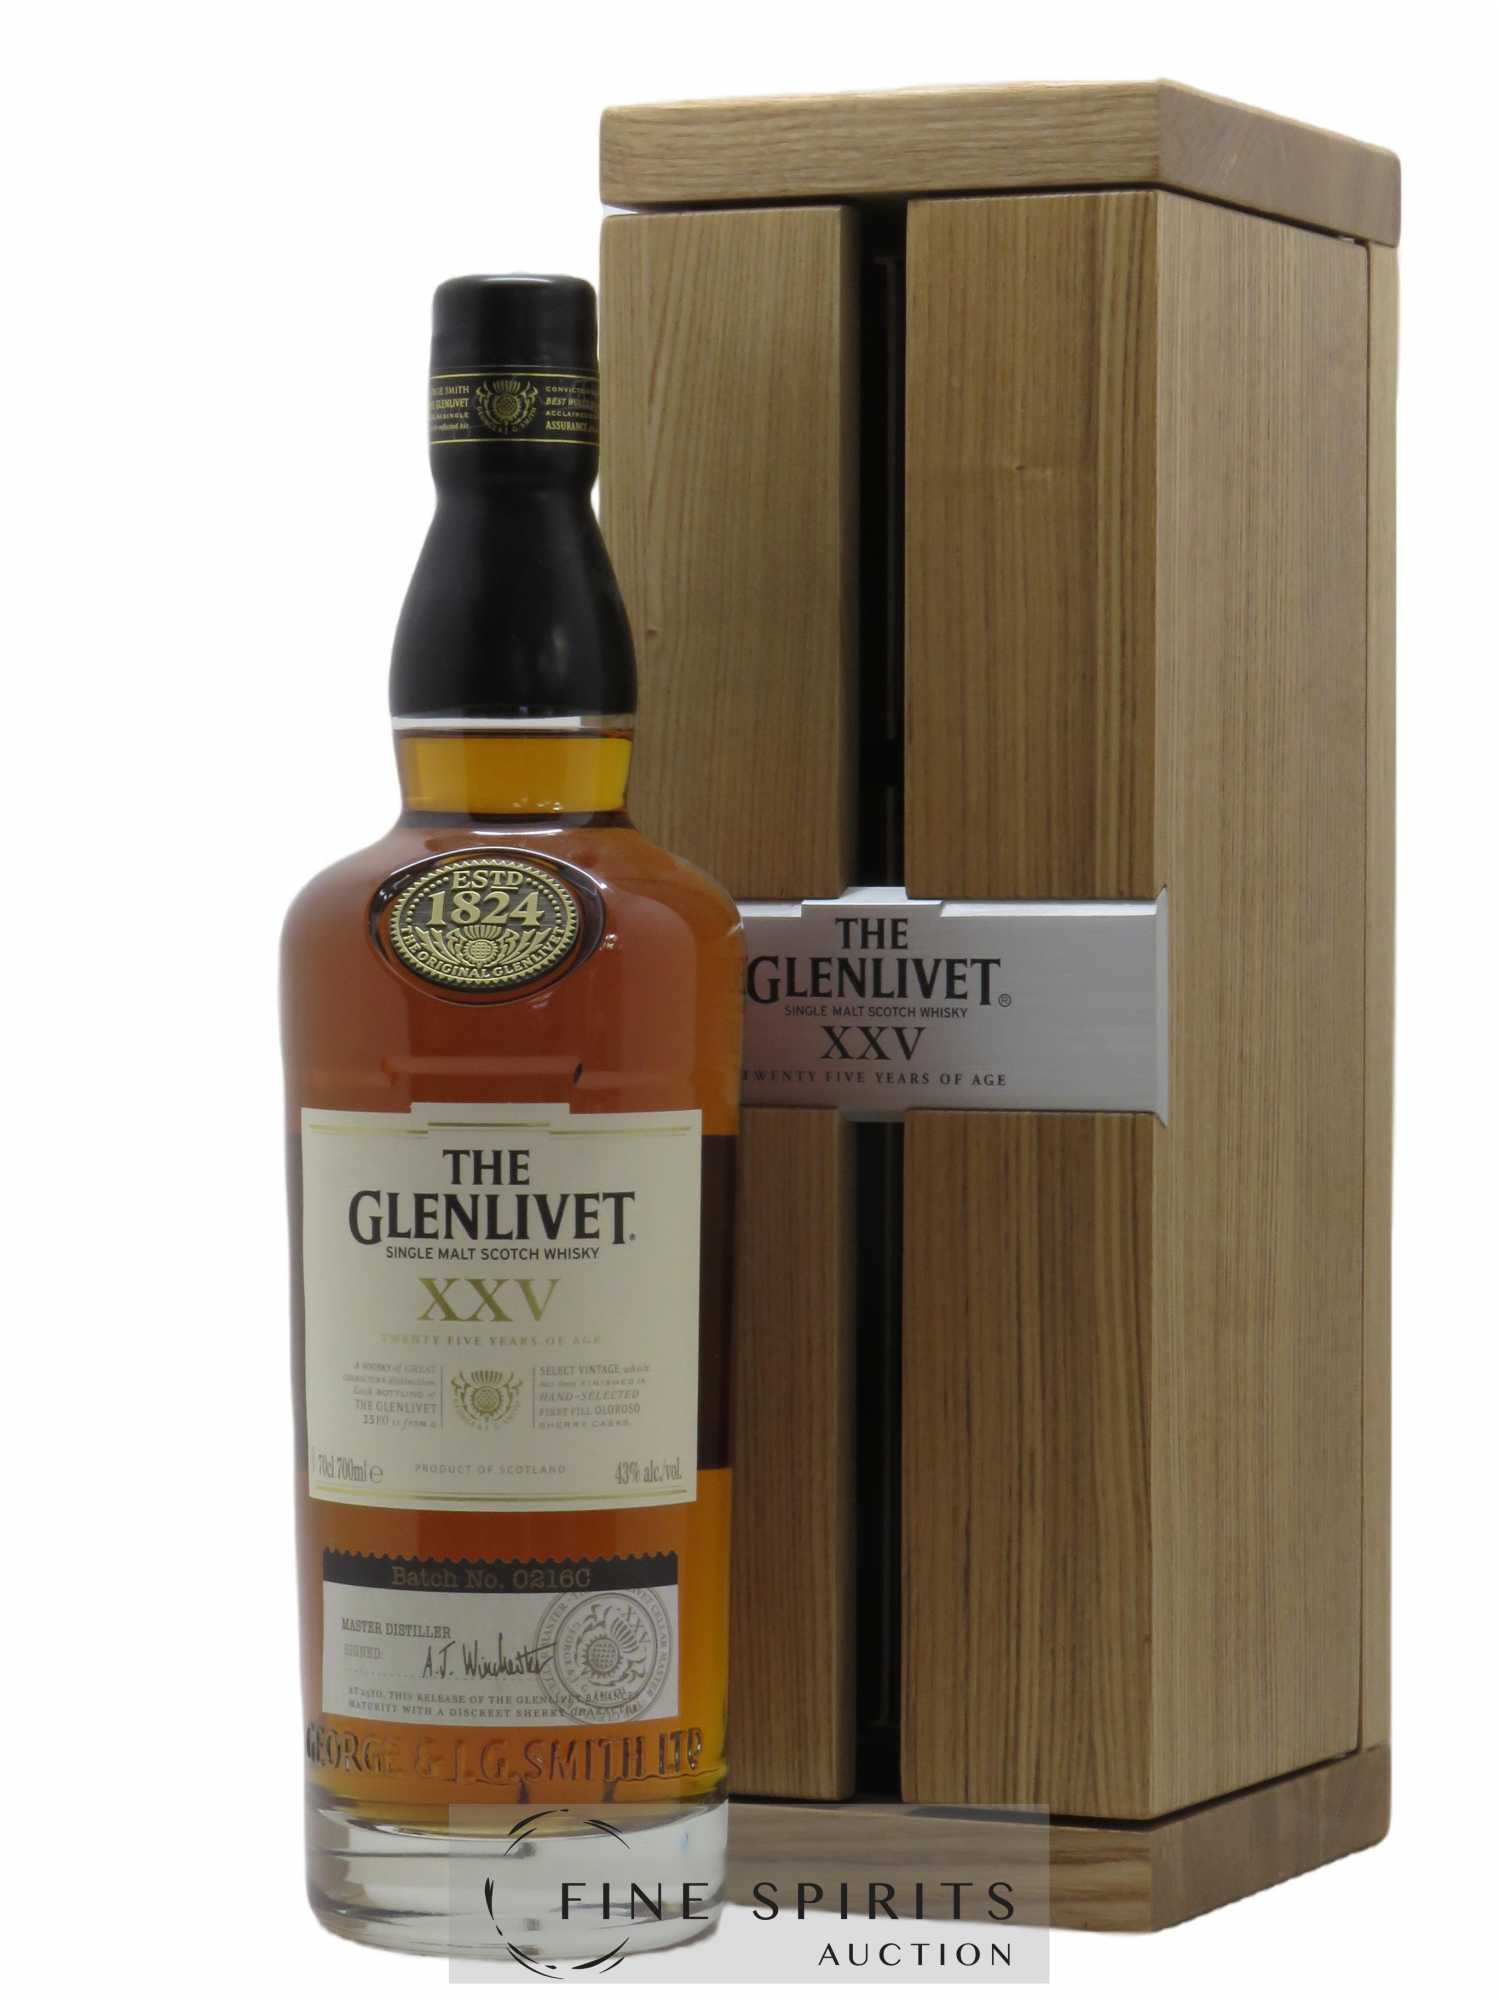 Glenlivet (The) 25 years Of. XXV Batch n°0216C - Oloroso Sherry Casks - bottled 2016